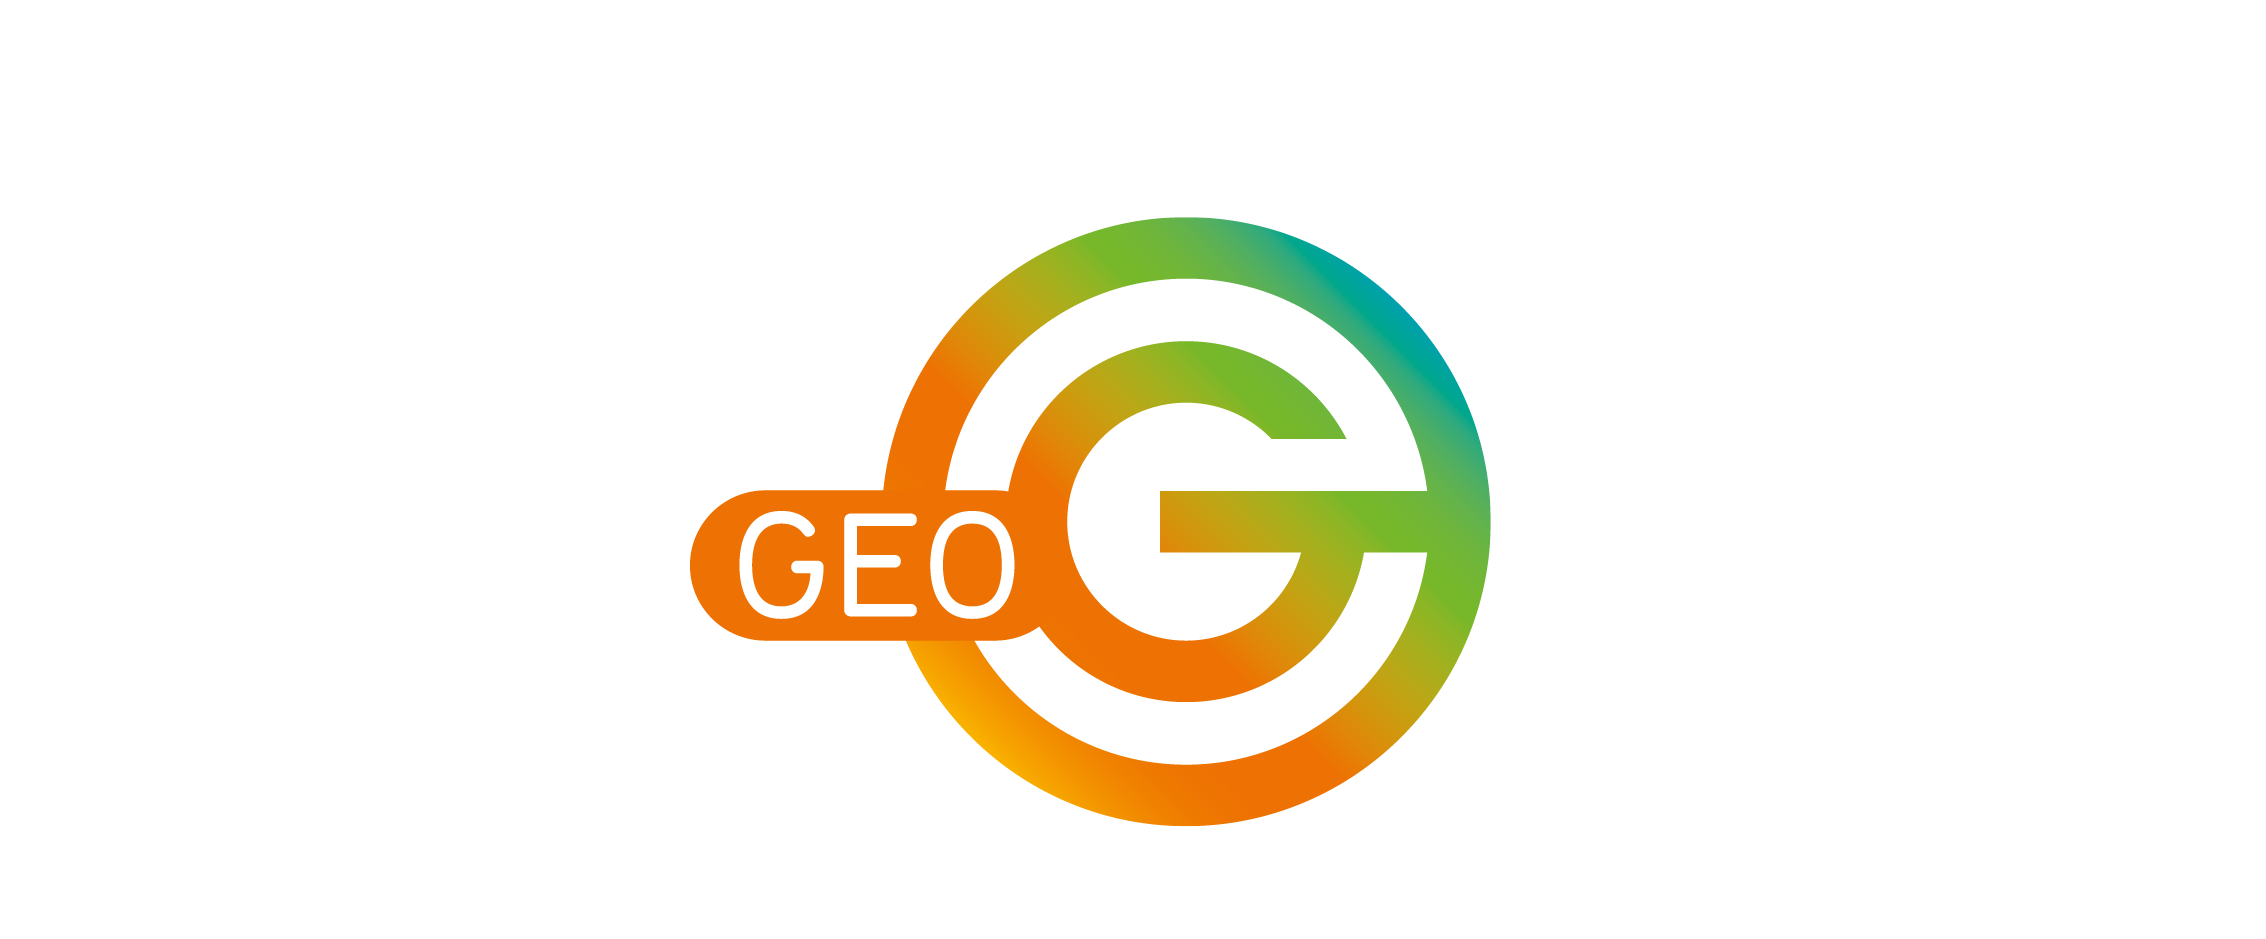 GEO logo 